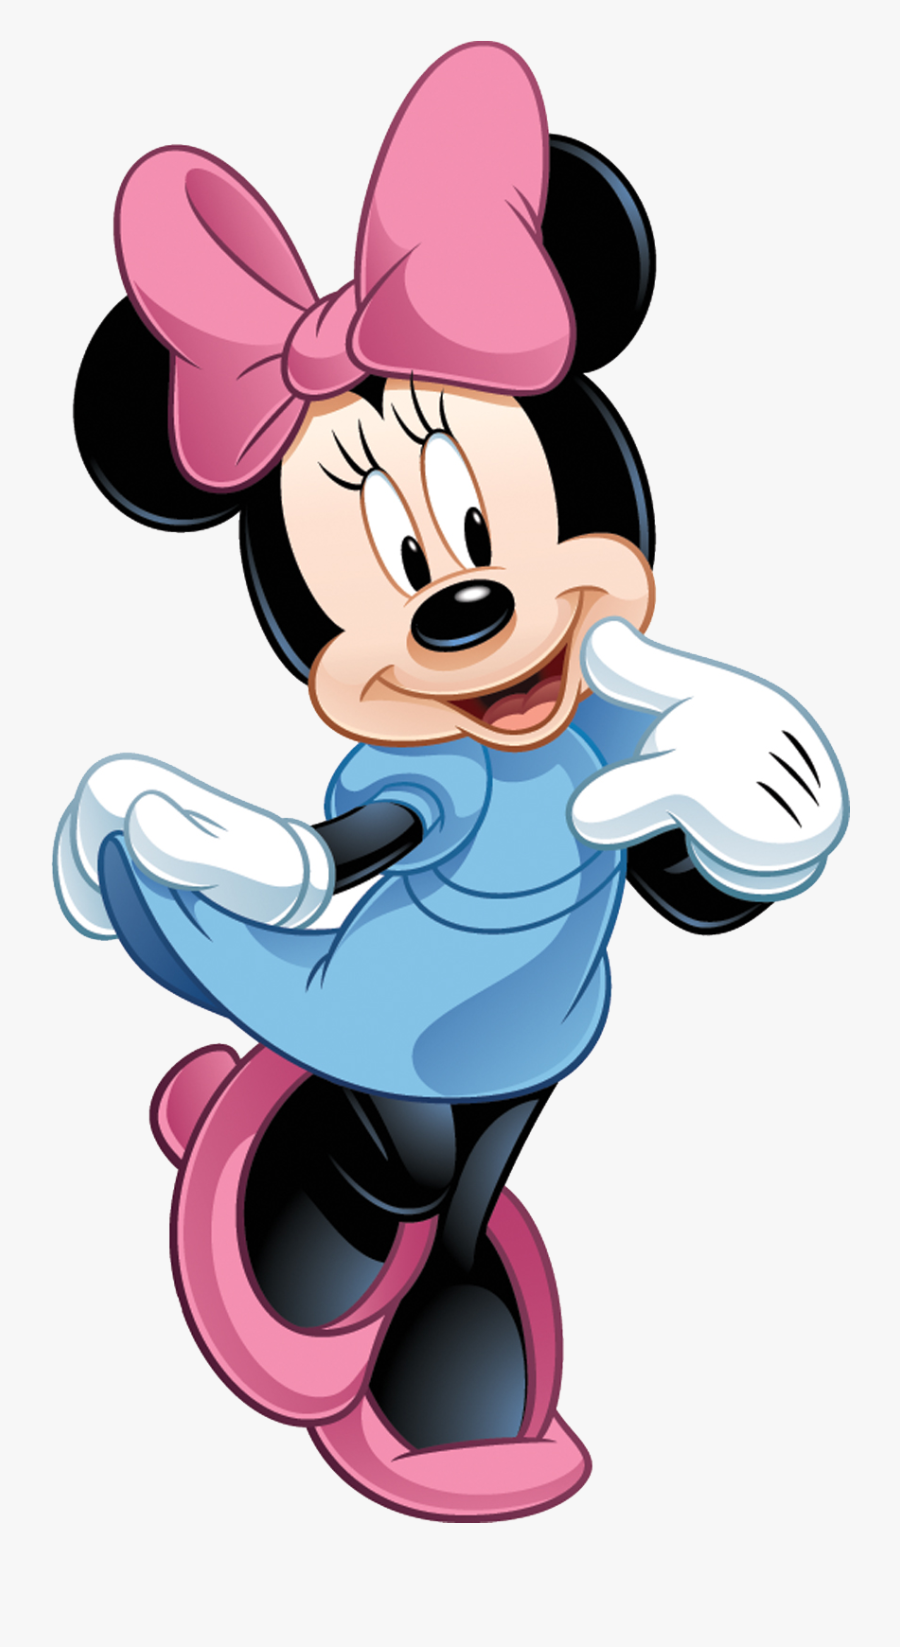 Minie Imagens Para Montagens Digitais - Minnie Mouse Png, Transparent Clipart